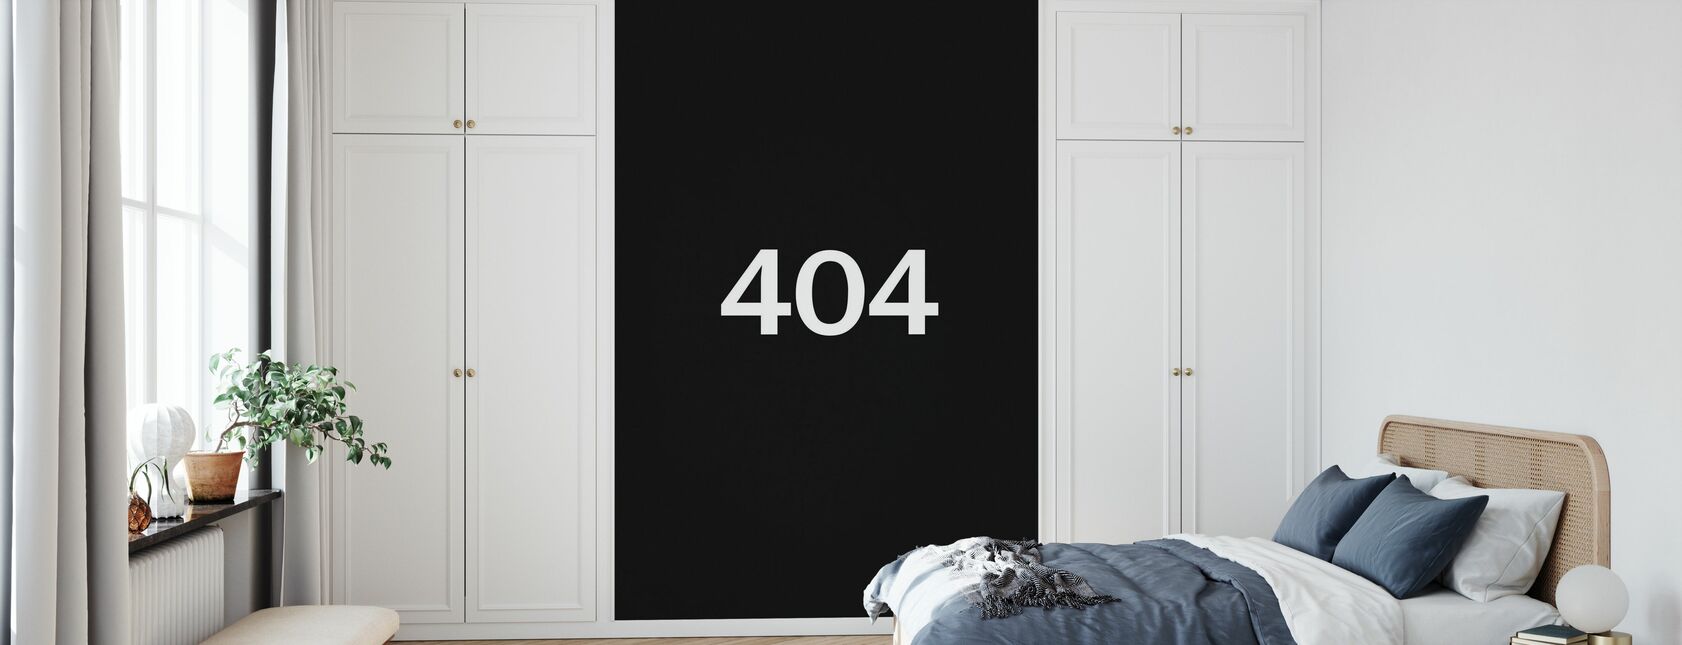 Four Zero Four - Wallpaper - Bedroom